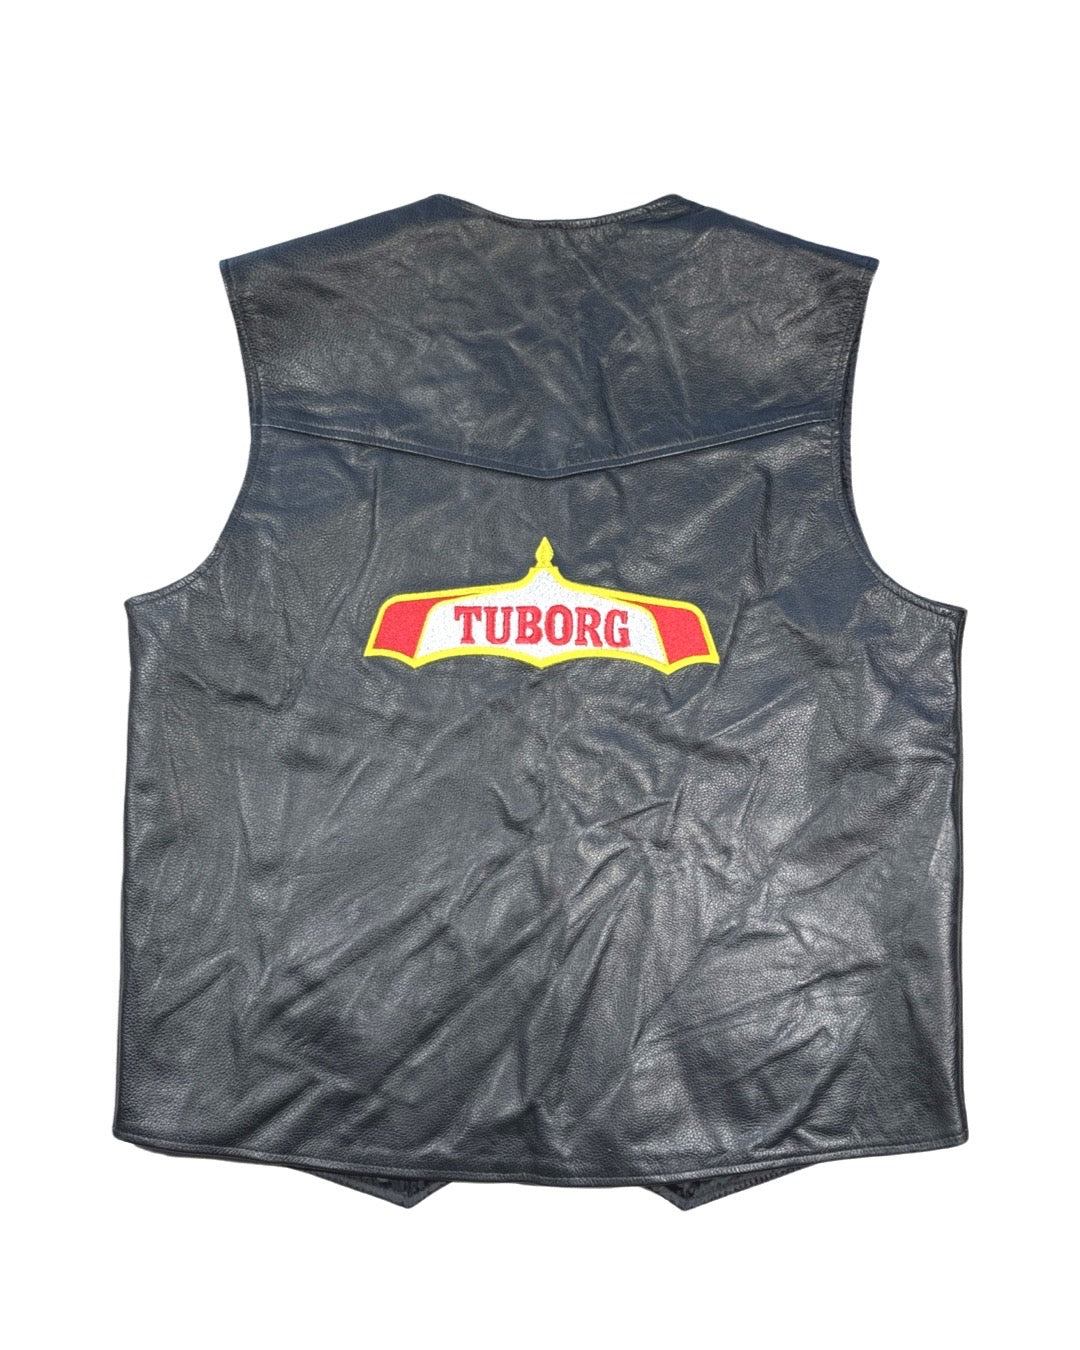 Tuborg Leather Vest - XL